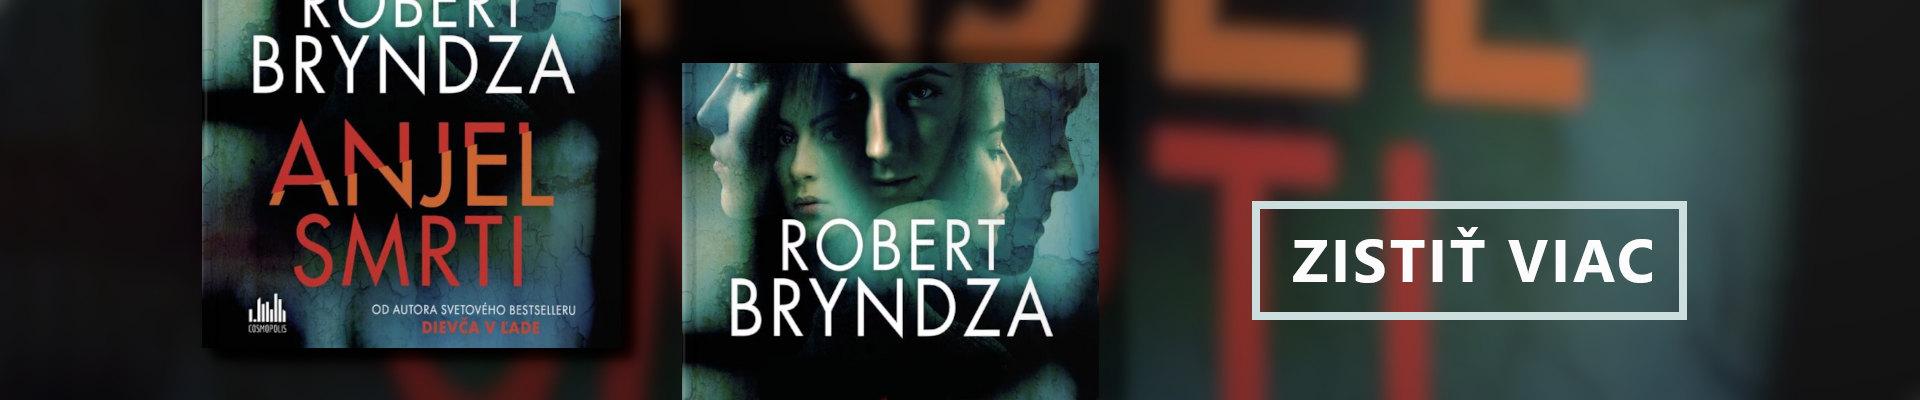 Robert Bryndza - Anjel smrti